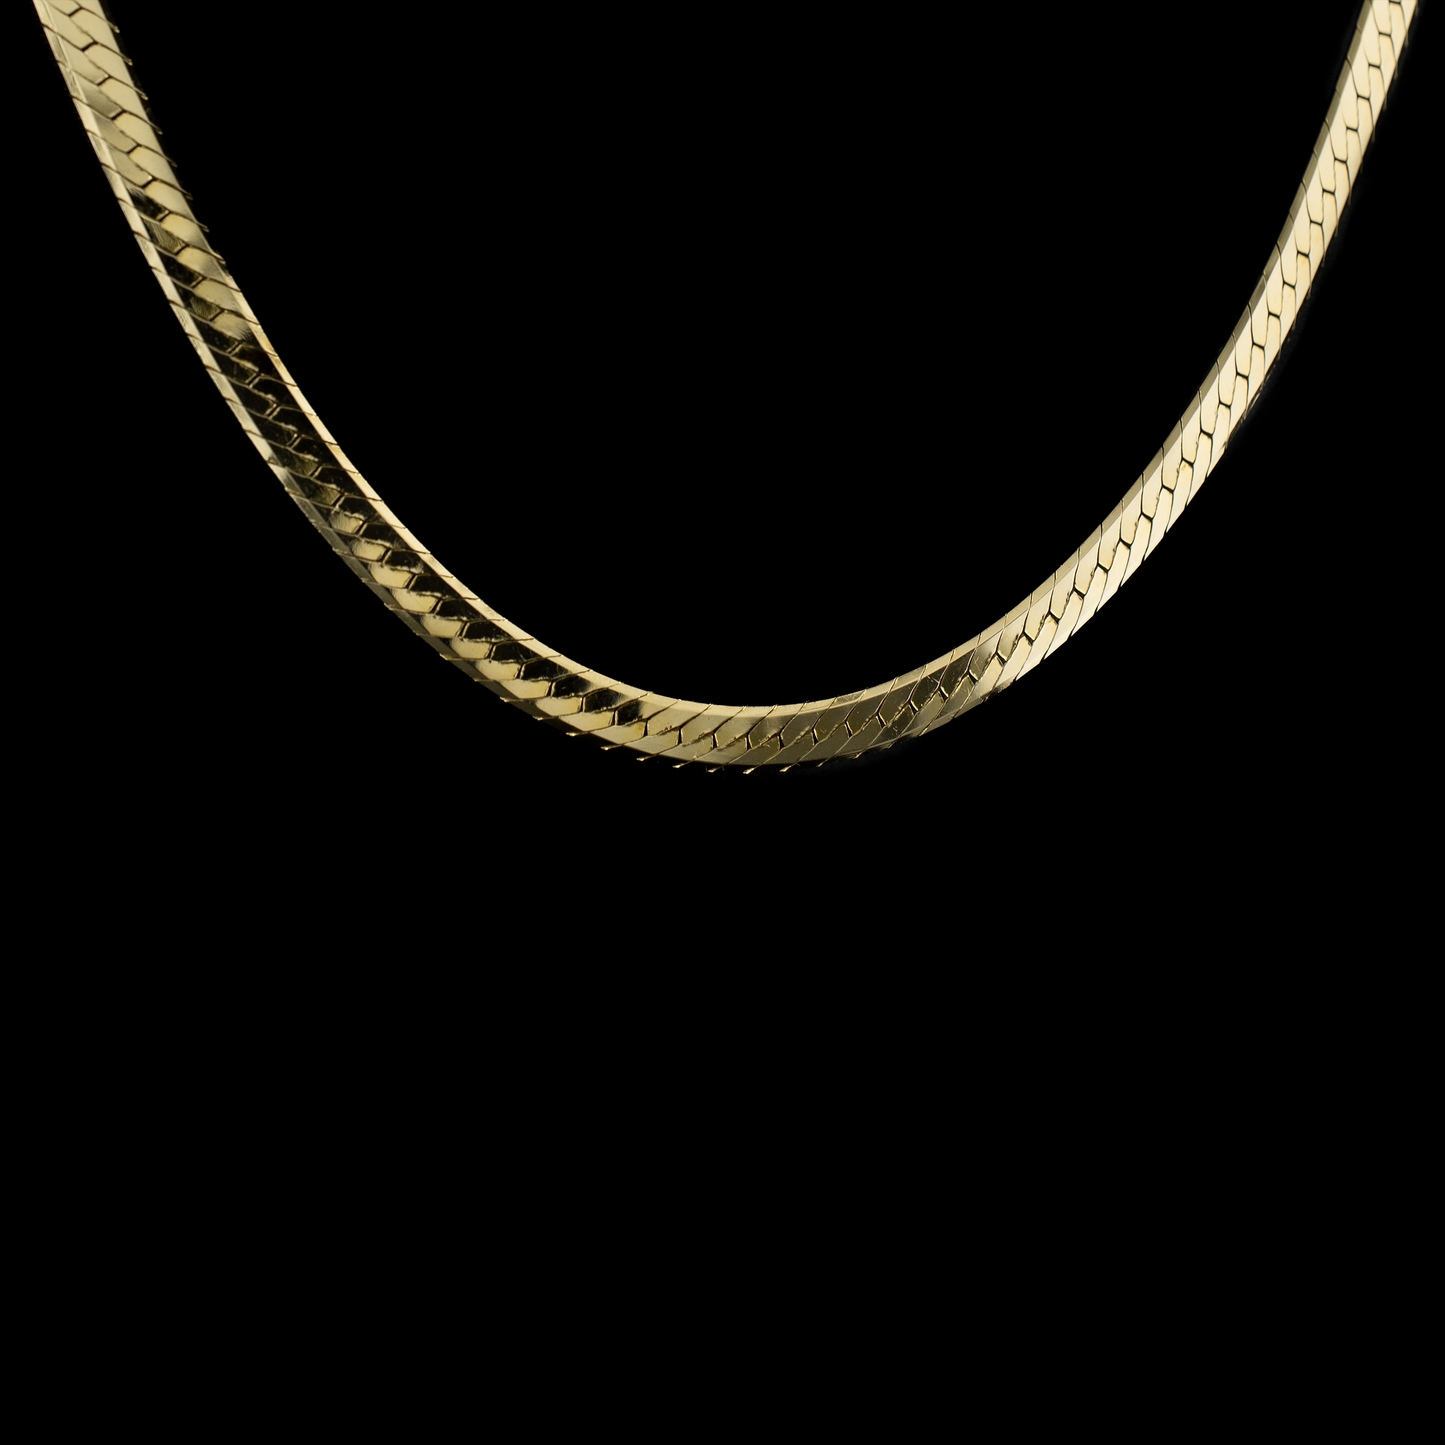 The Long Herringbone Necklace